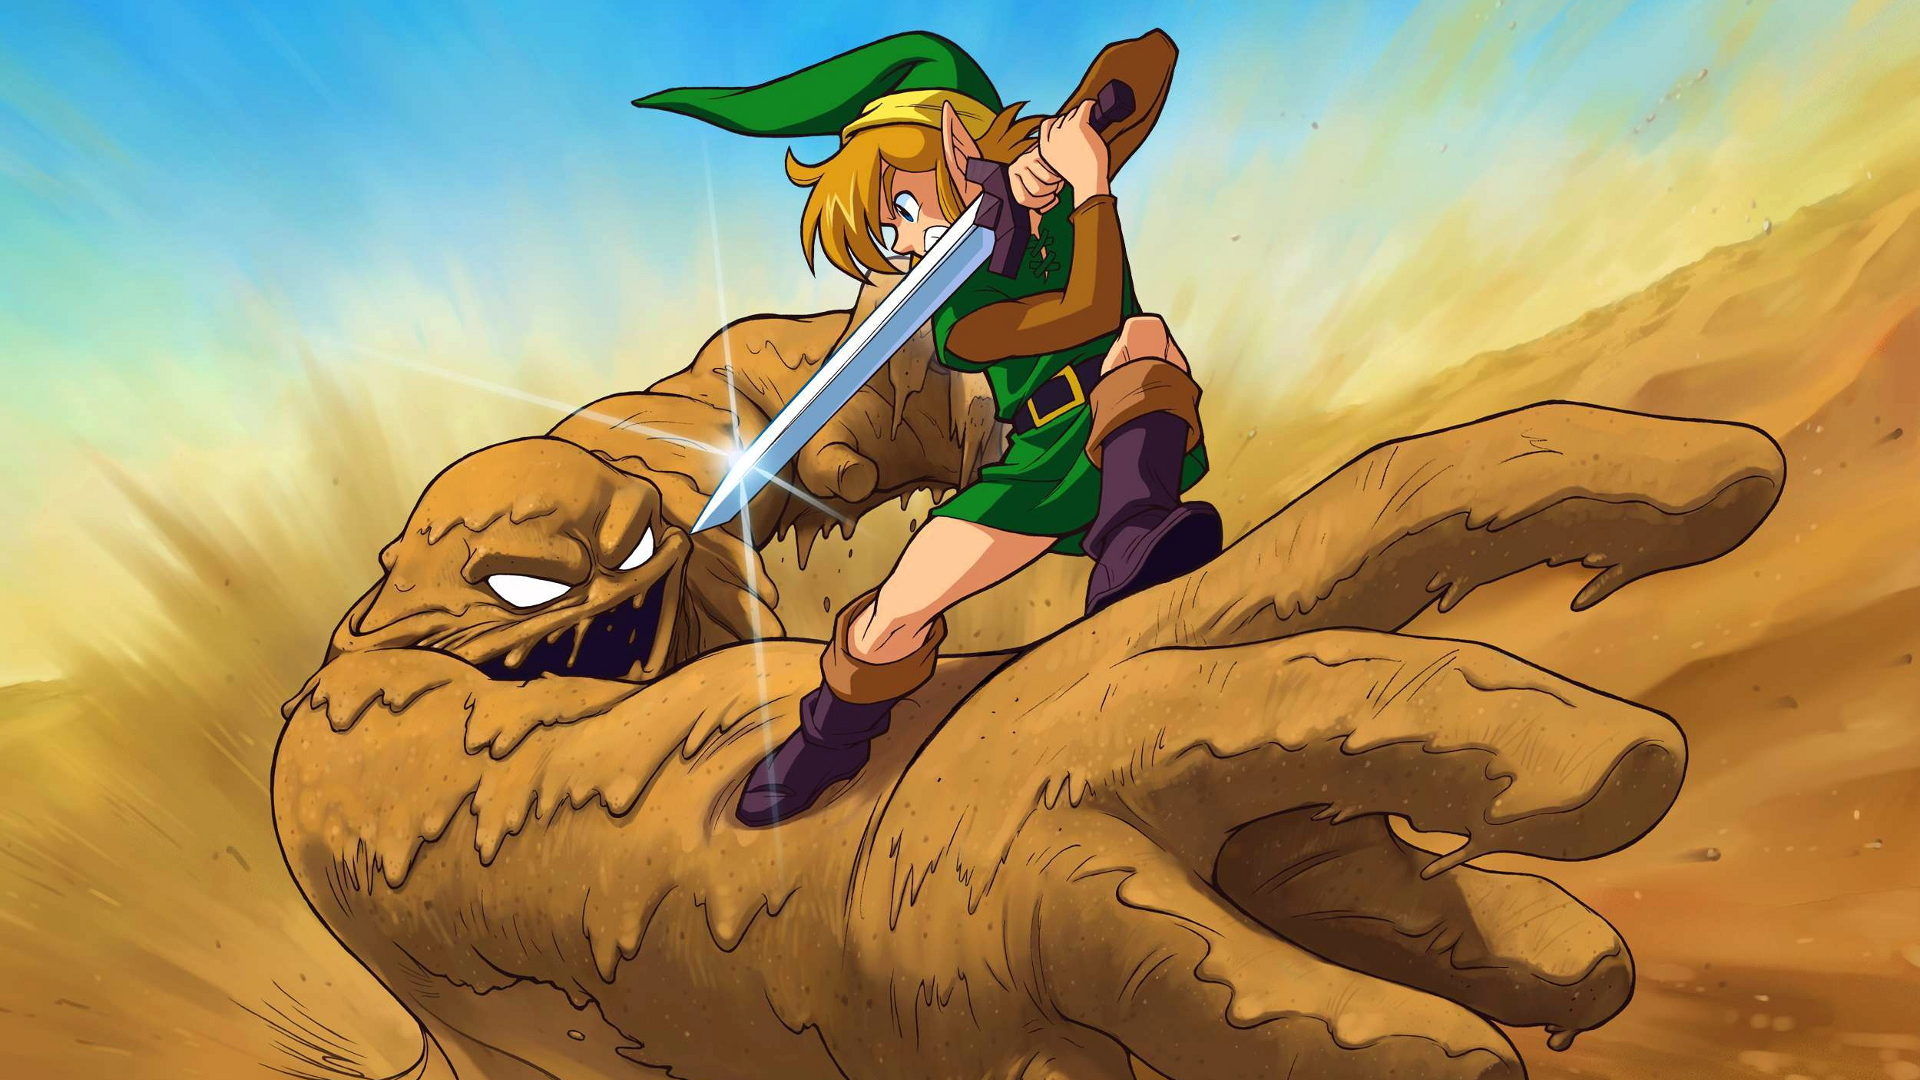 Descarga gratuita de fondo de pantalla para móvil de The Legend Of Zelda: A Link To The Past, Zelda, Videojuego.